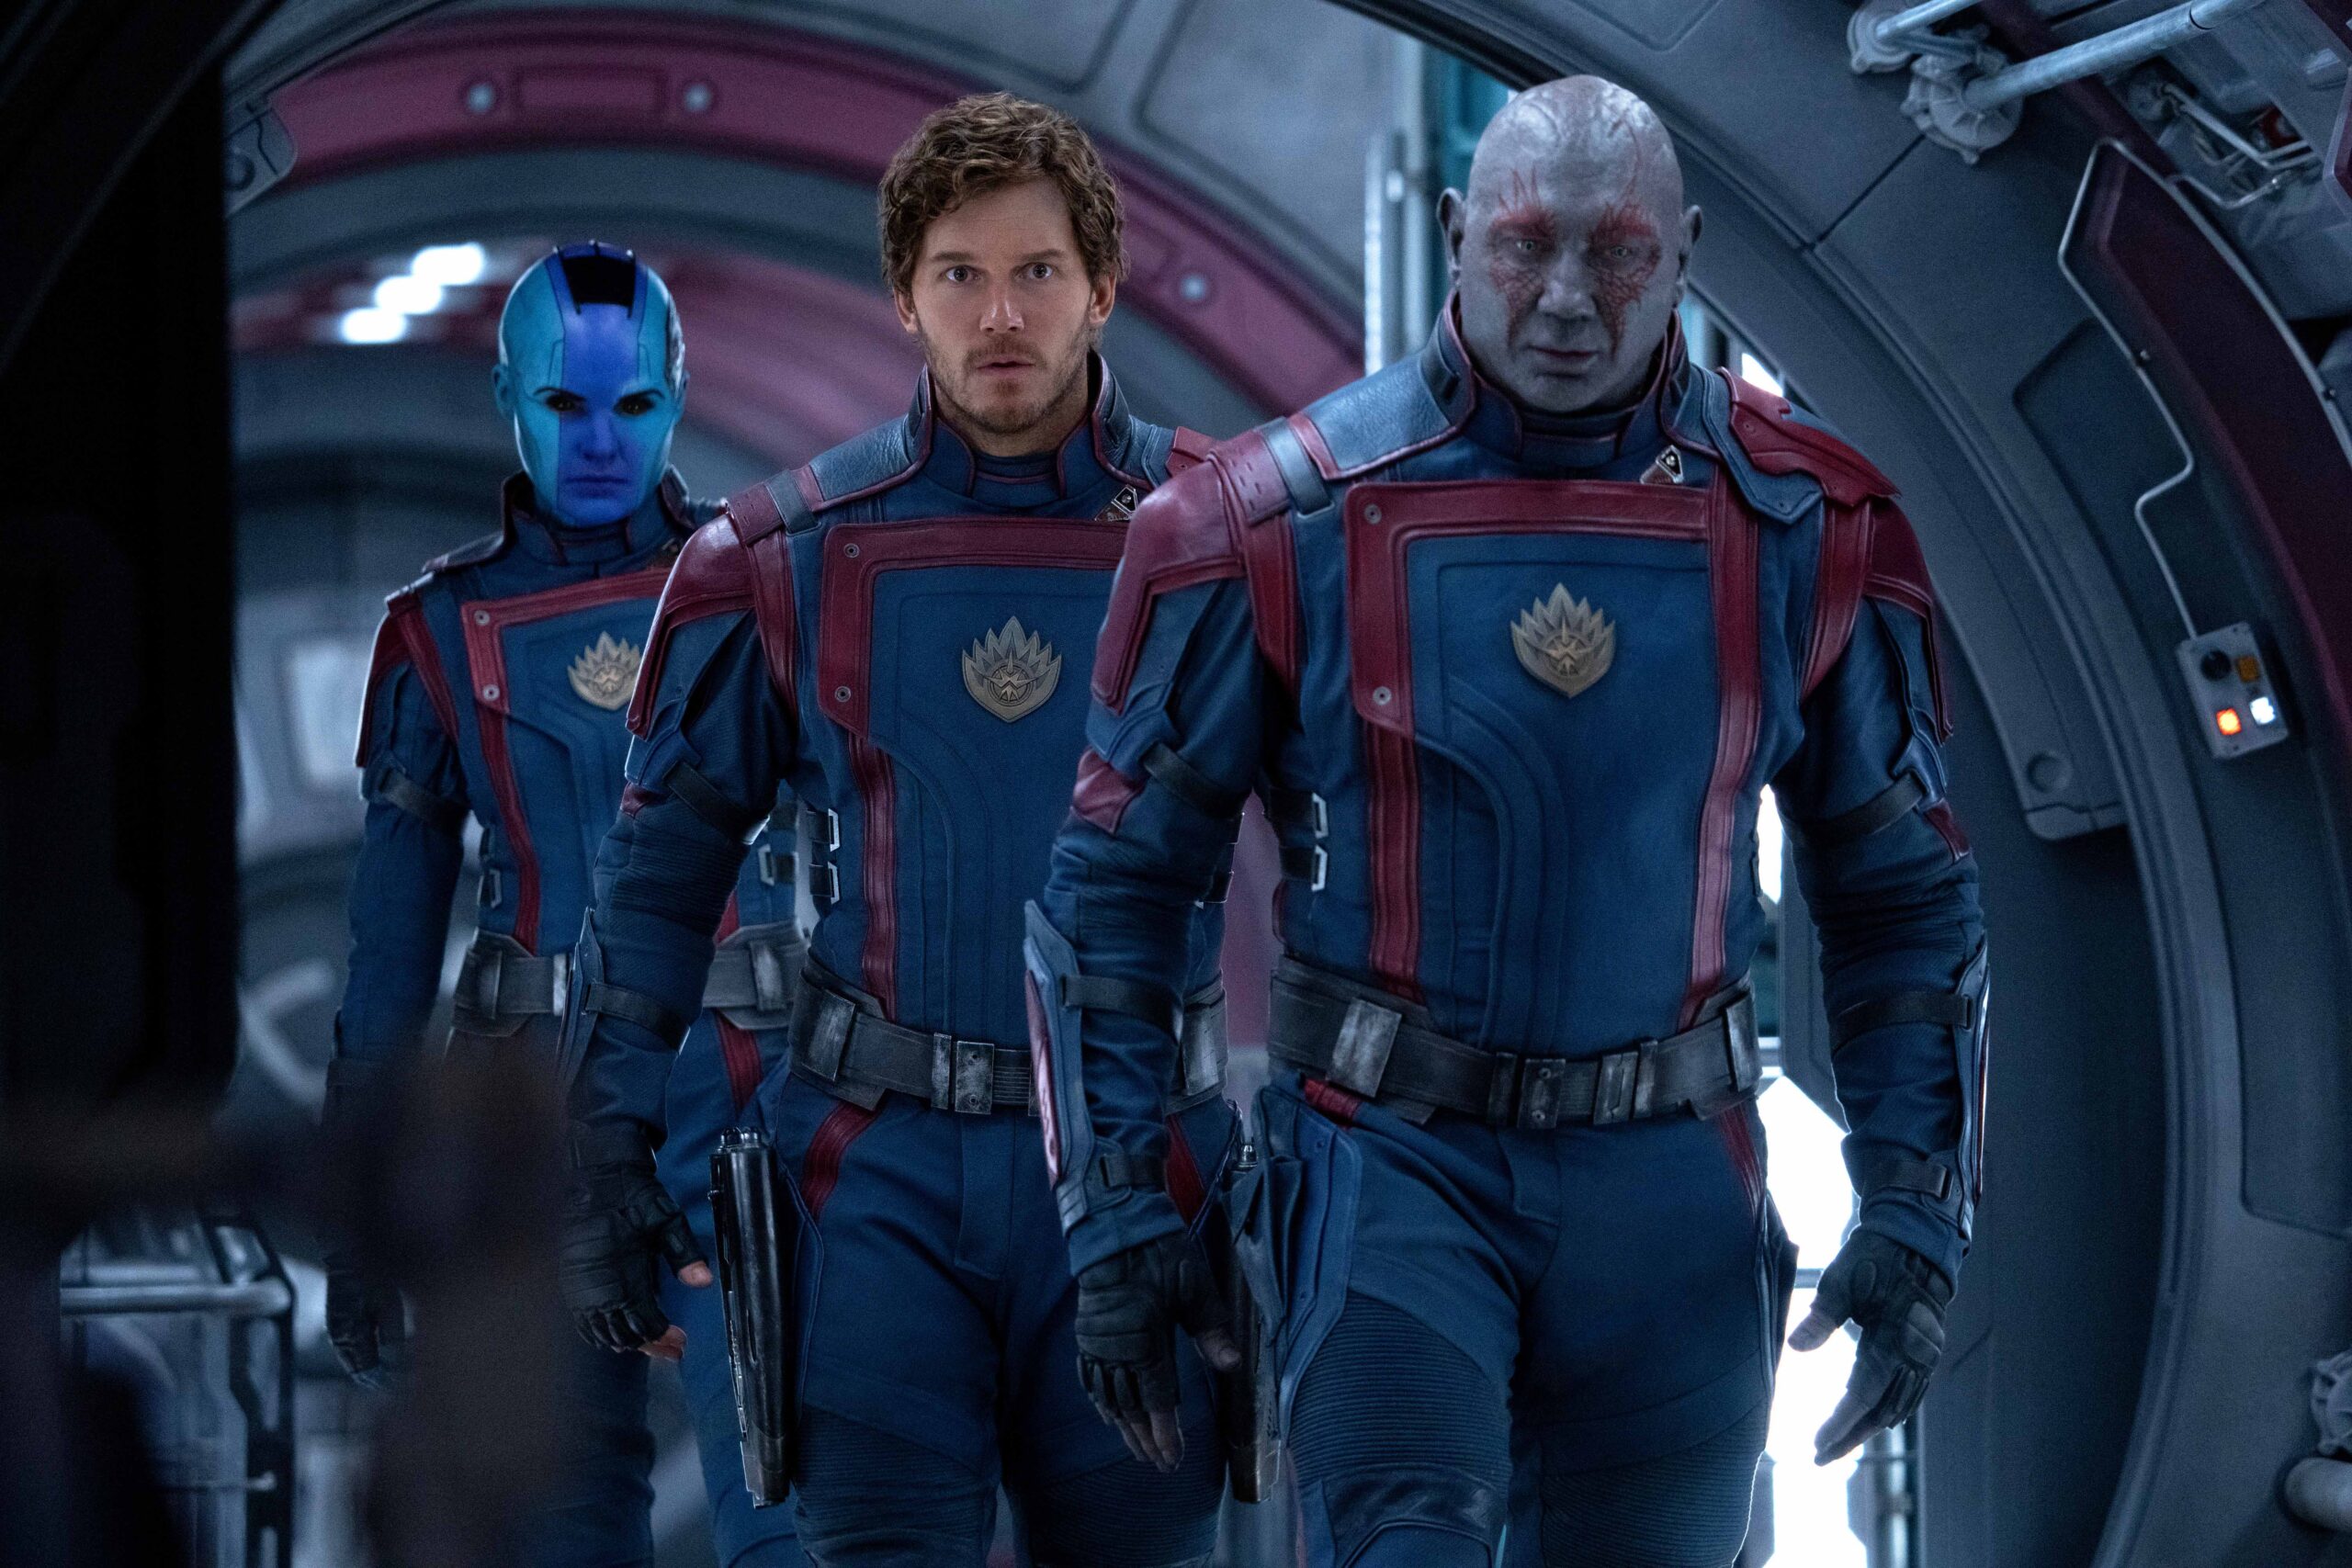 Karen Gillan as Nebula, Chris Pratt as Peter Quill, and Dave Bautista as Drax in Guardians of the Galaxy Vol. 3